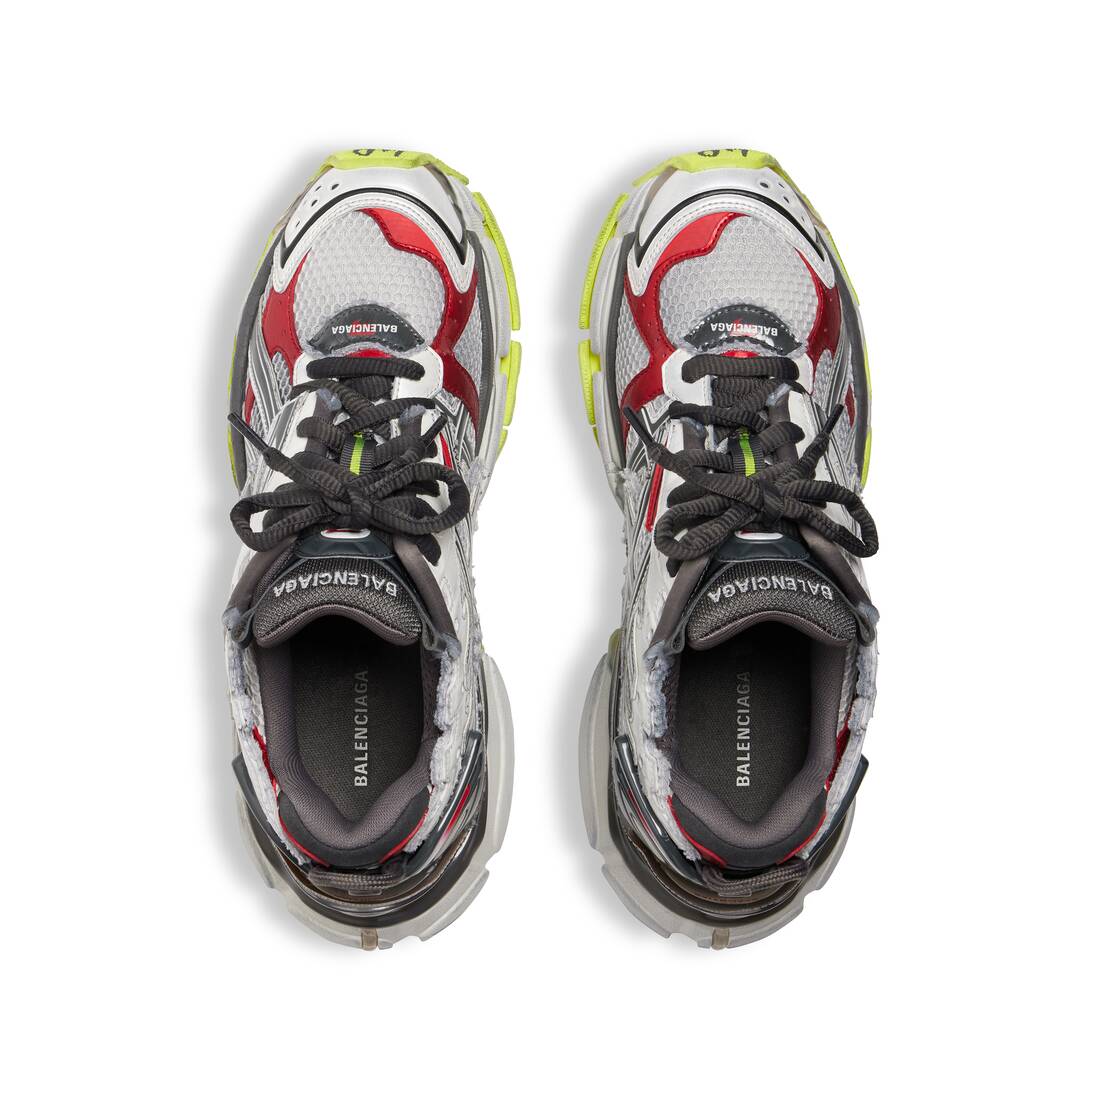 Balenciaga Track 2 Sneaker in Black & Grey & Red